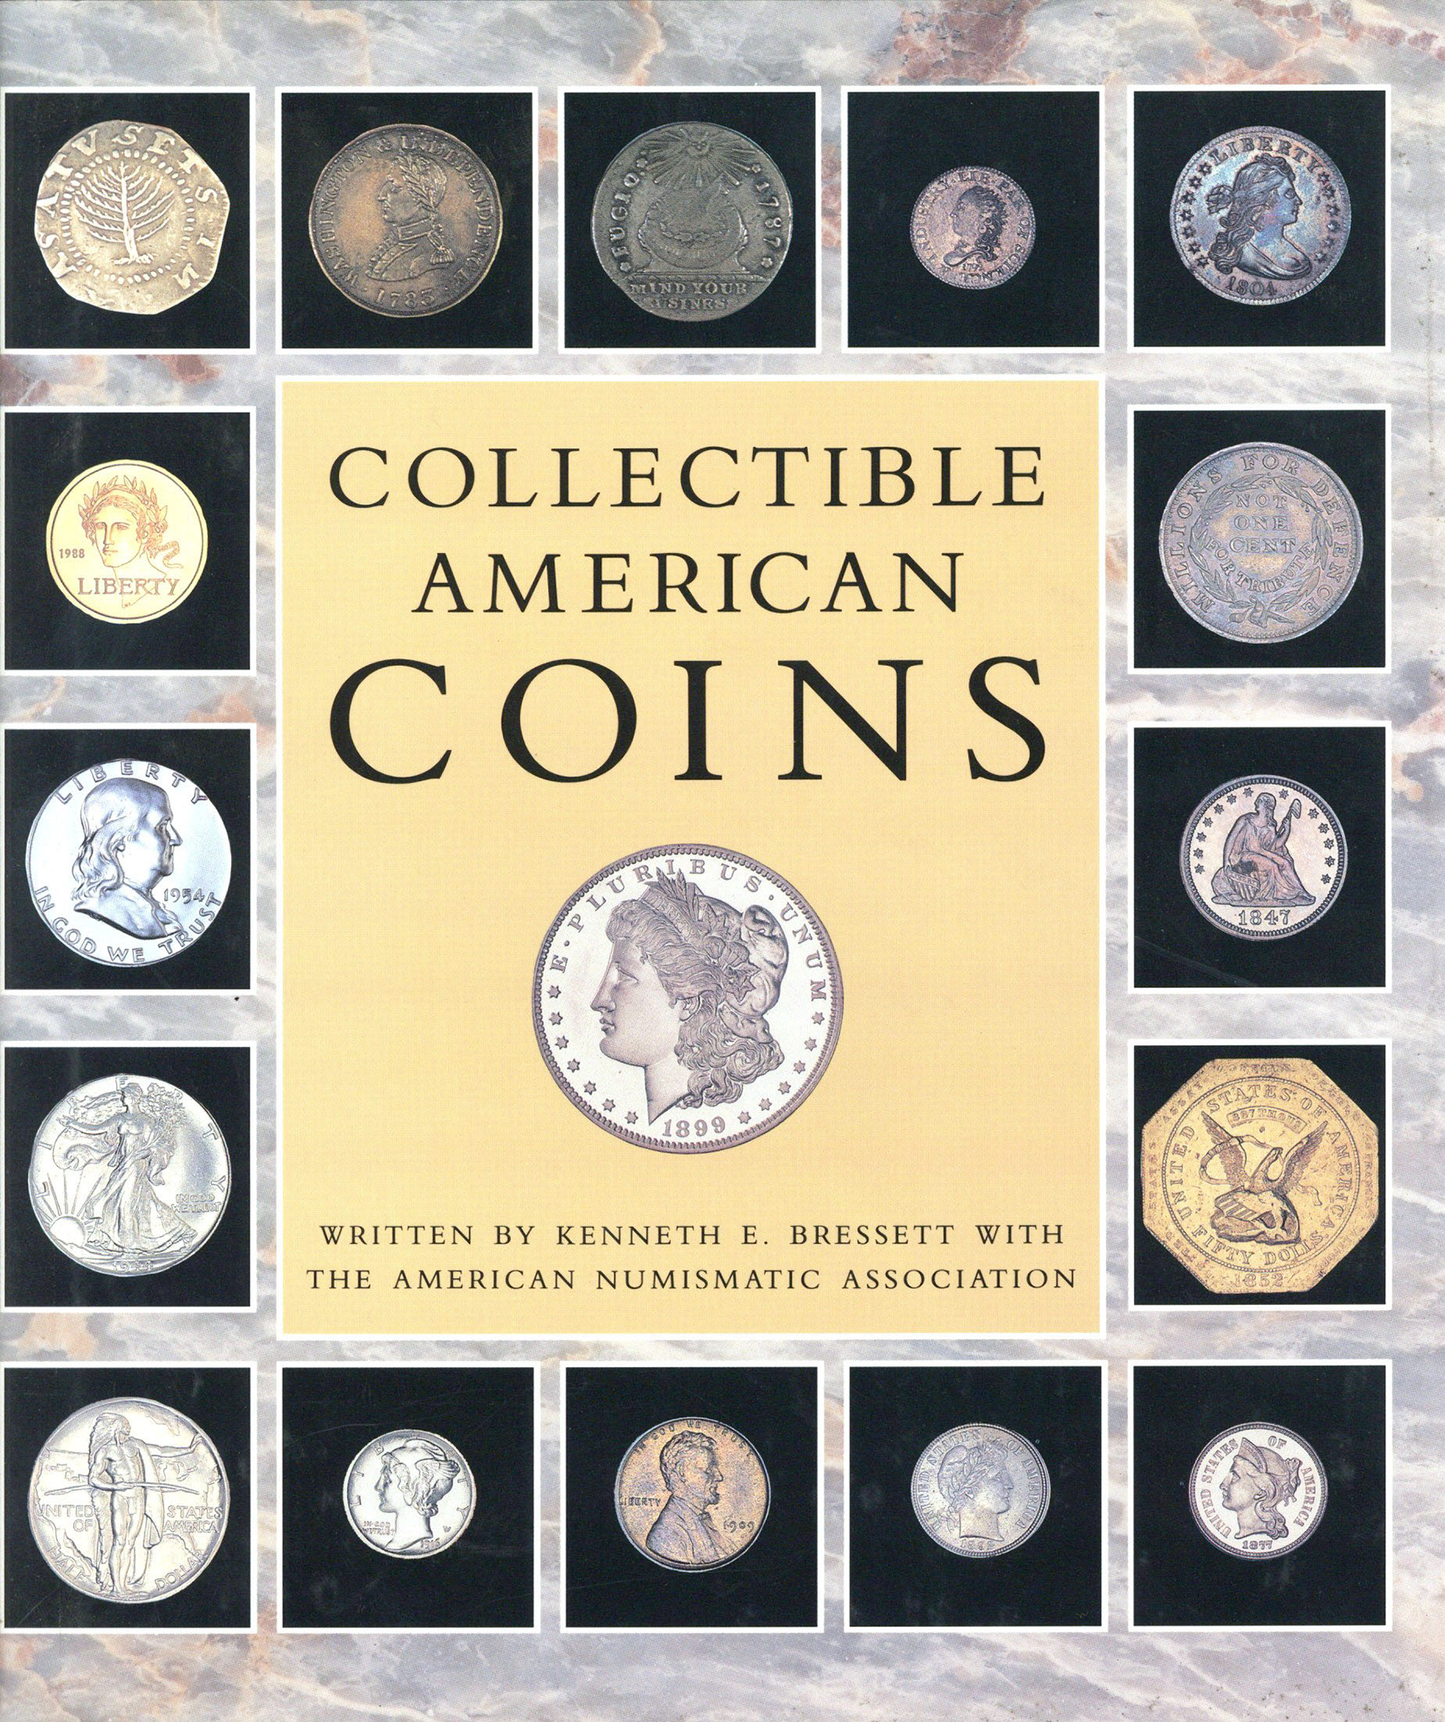 Collectible American Coins